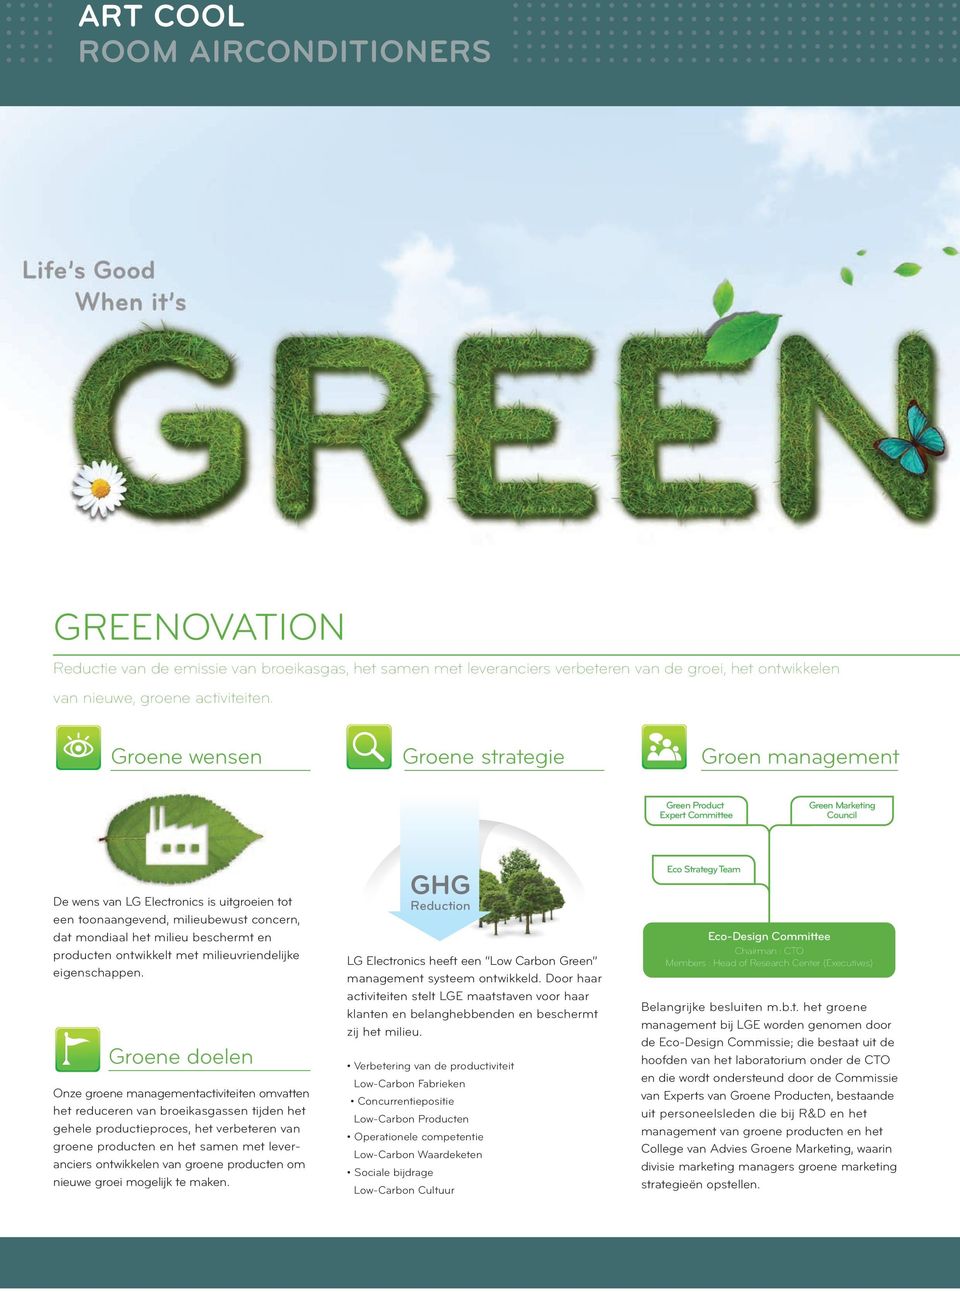 Business Water Treatment Business LG Electronics heeft een Low Carbon Green management systeem ontwikkeld.